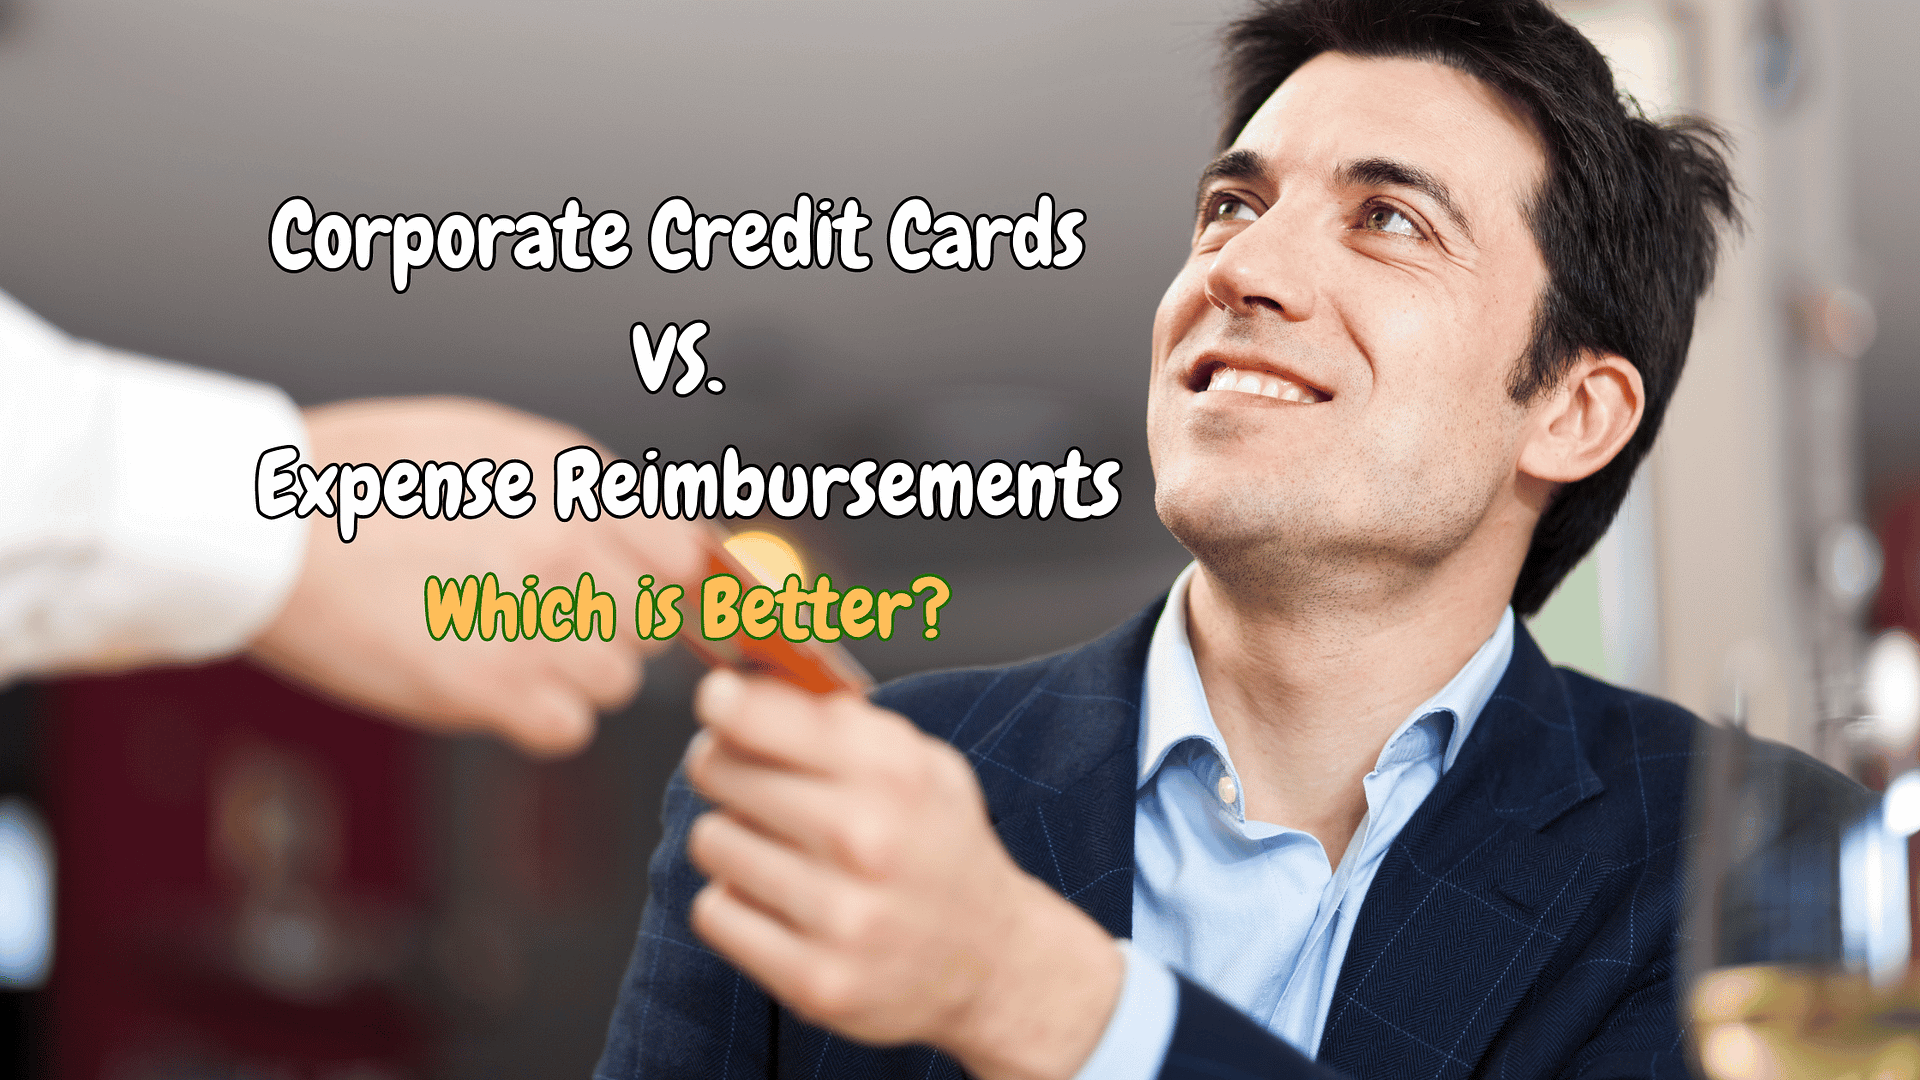 Corporate Credit Cards Versus Expense Reimbursements